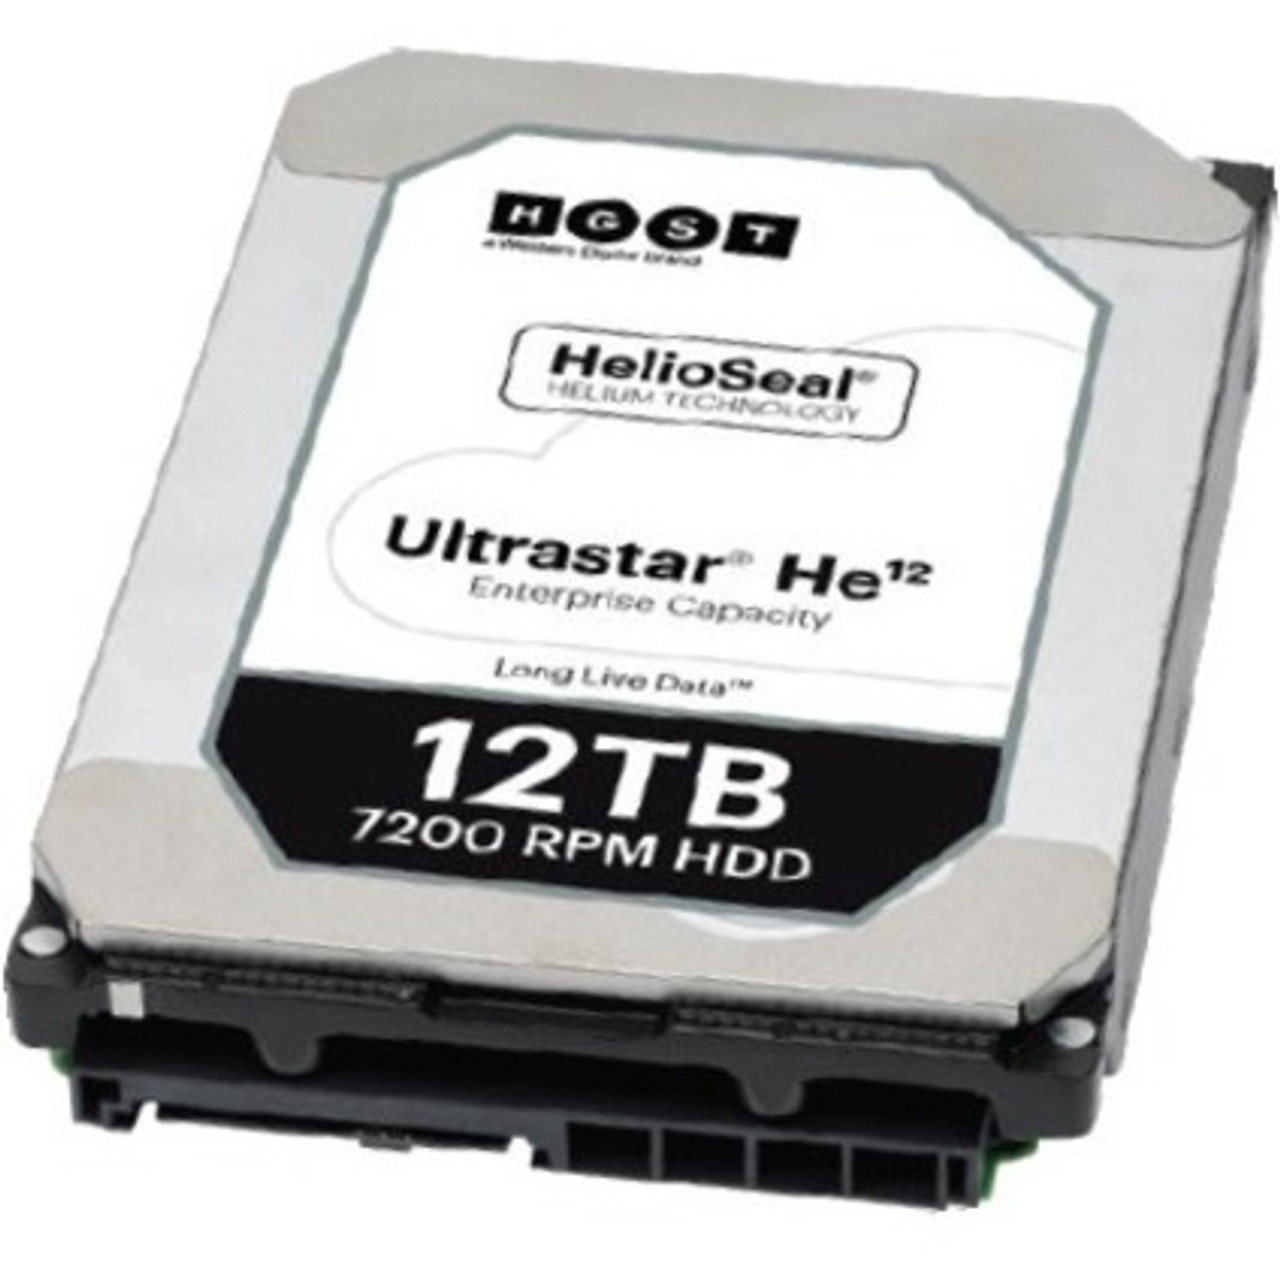 HGST Ultrastar He12 12 TB Hard Drive - Internal - SAS (12Gb/s SAS)